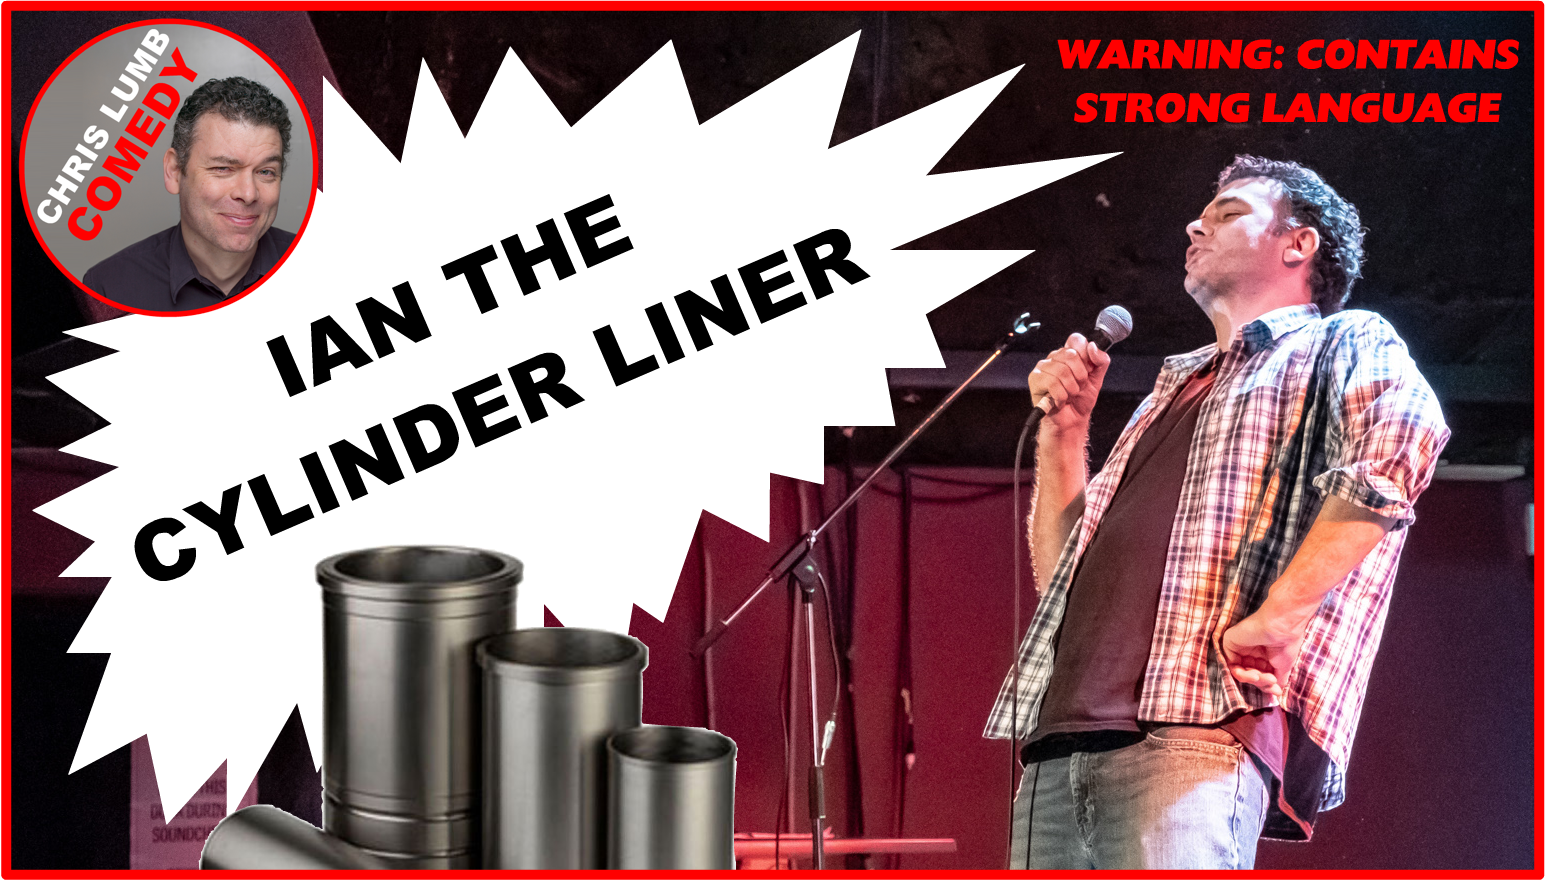 Chris Lumb Comedy "Ian the Cylinder Liner"